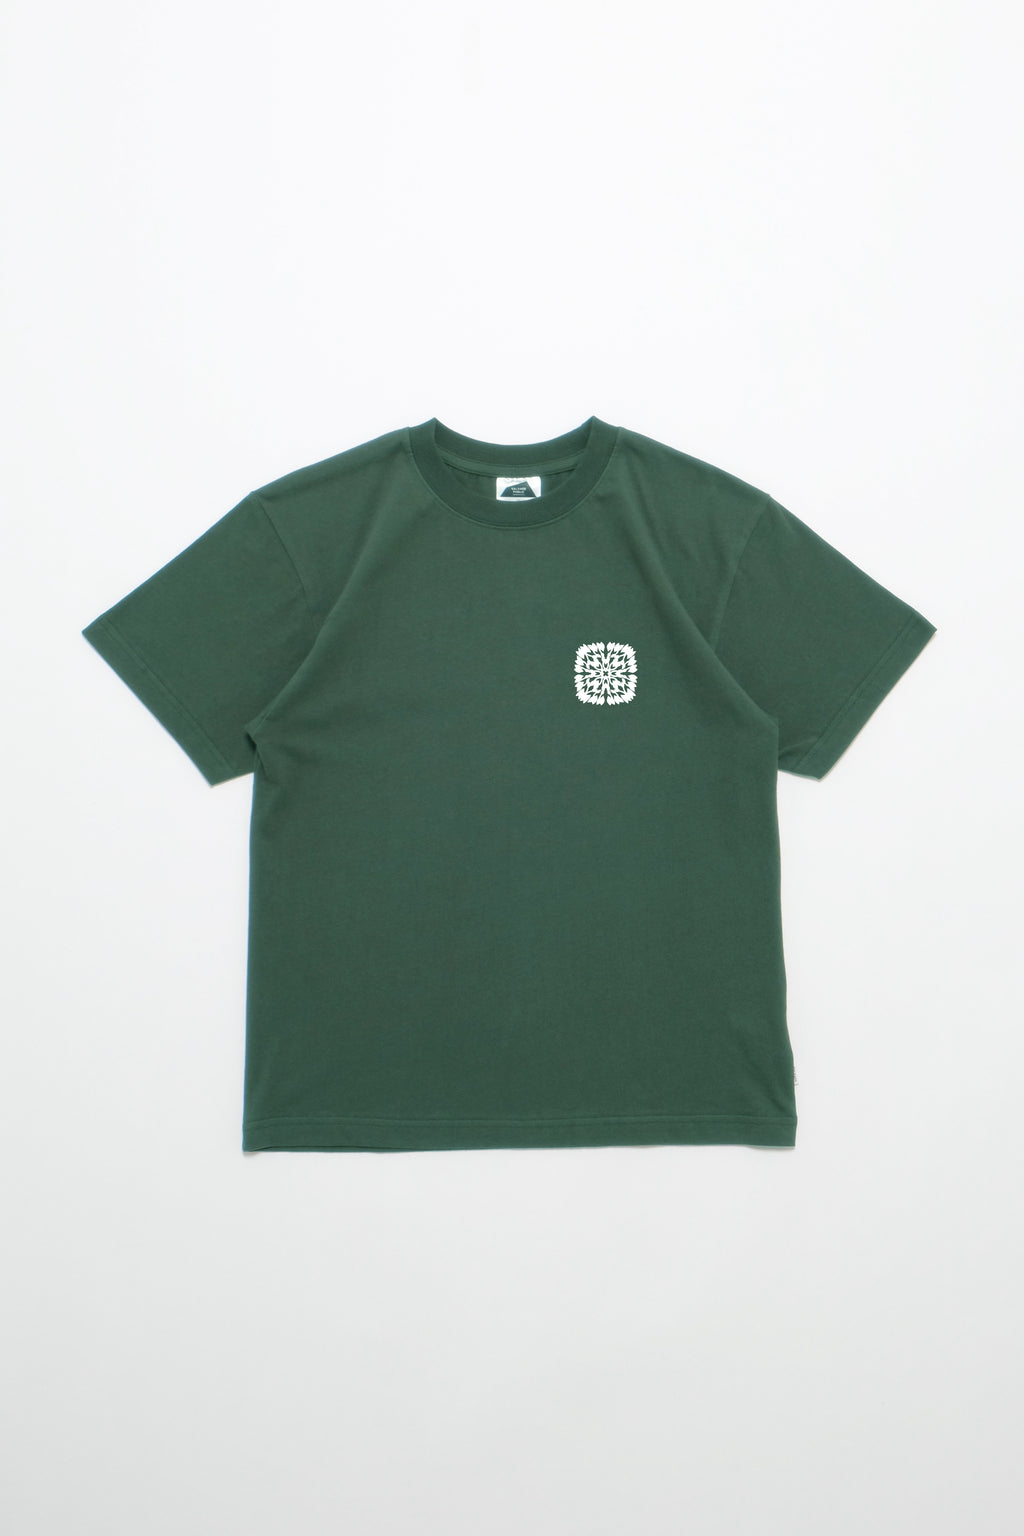 T-Shirt - Kalo - Forest Green,